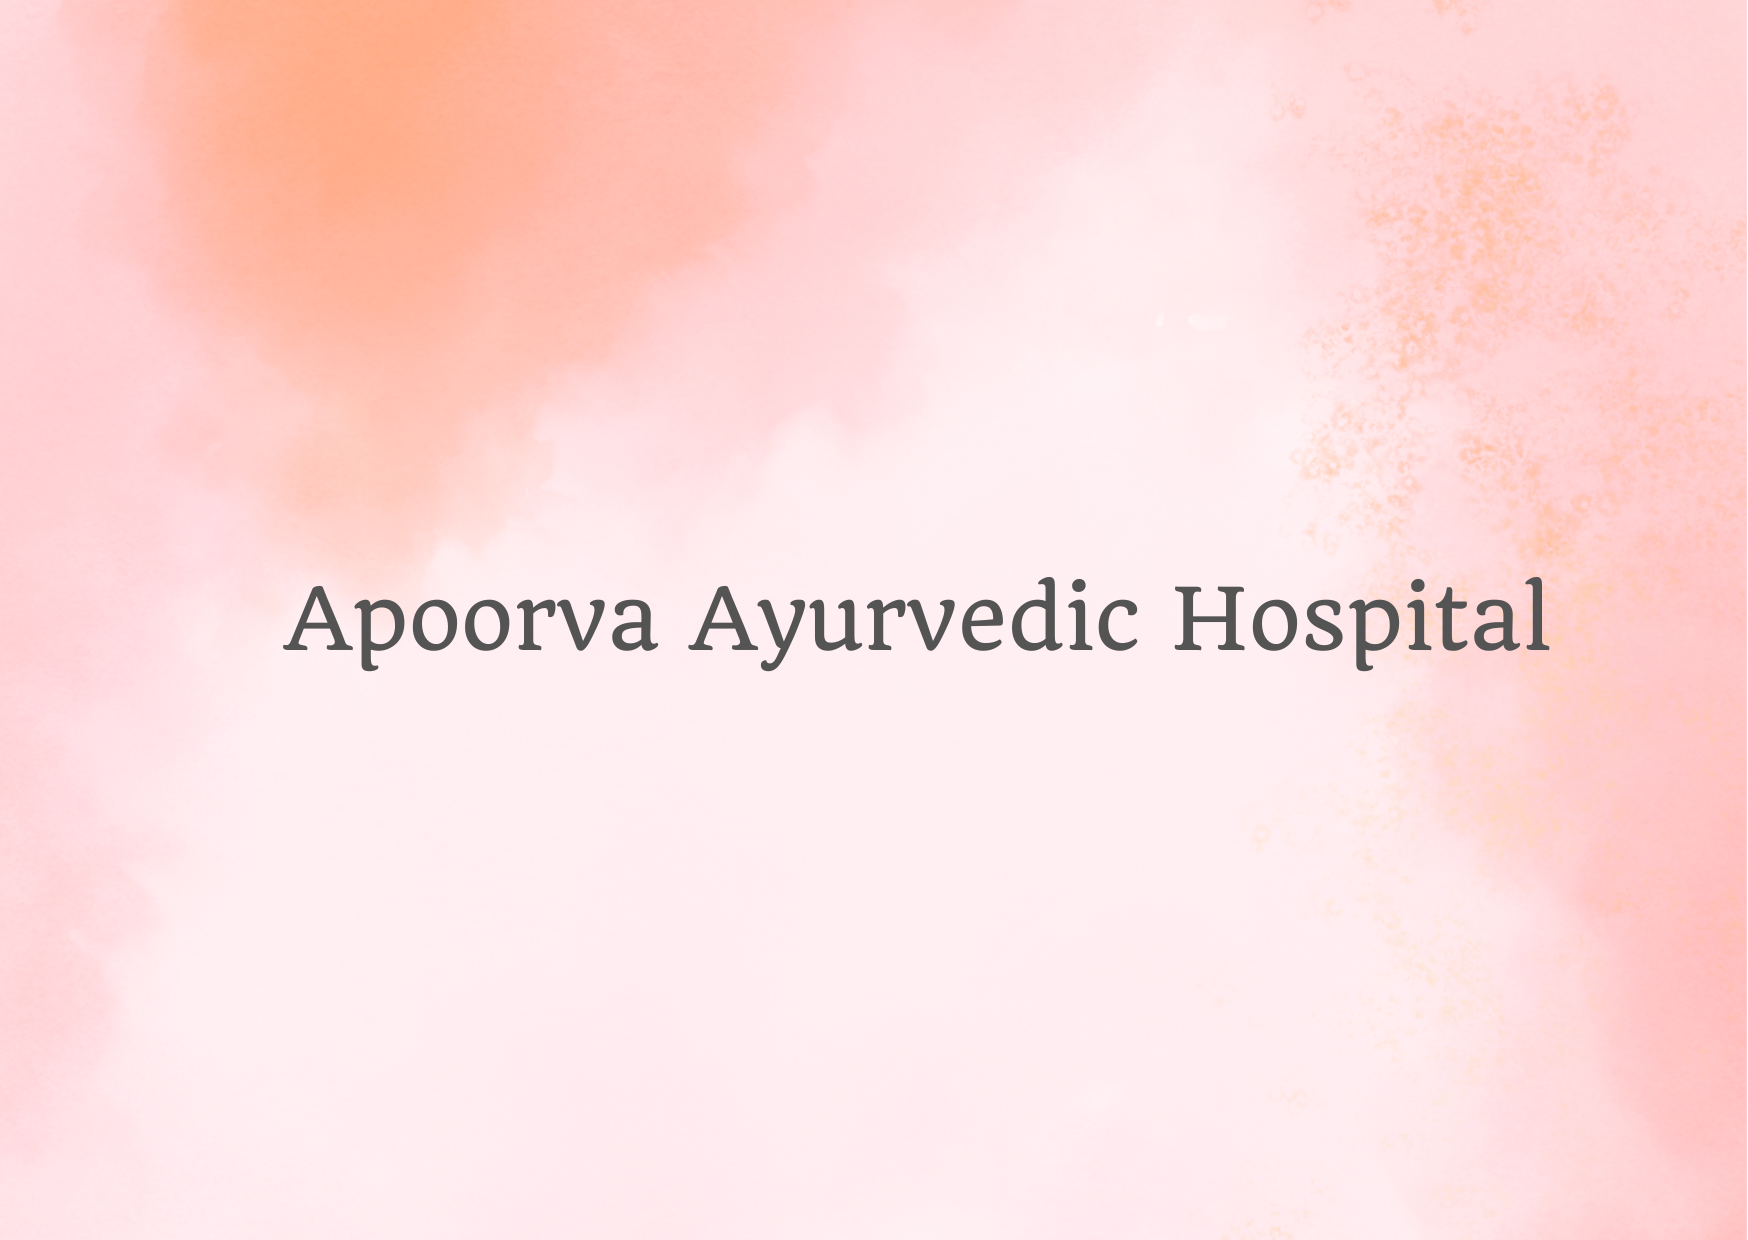 Apoorva Ayurvedic Hospital,   